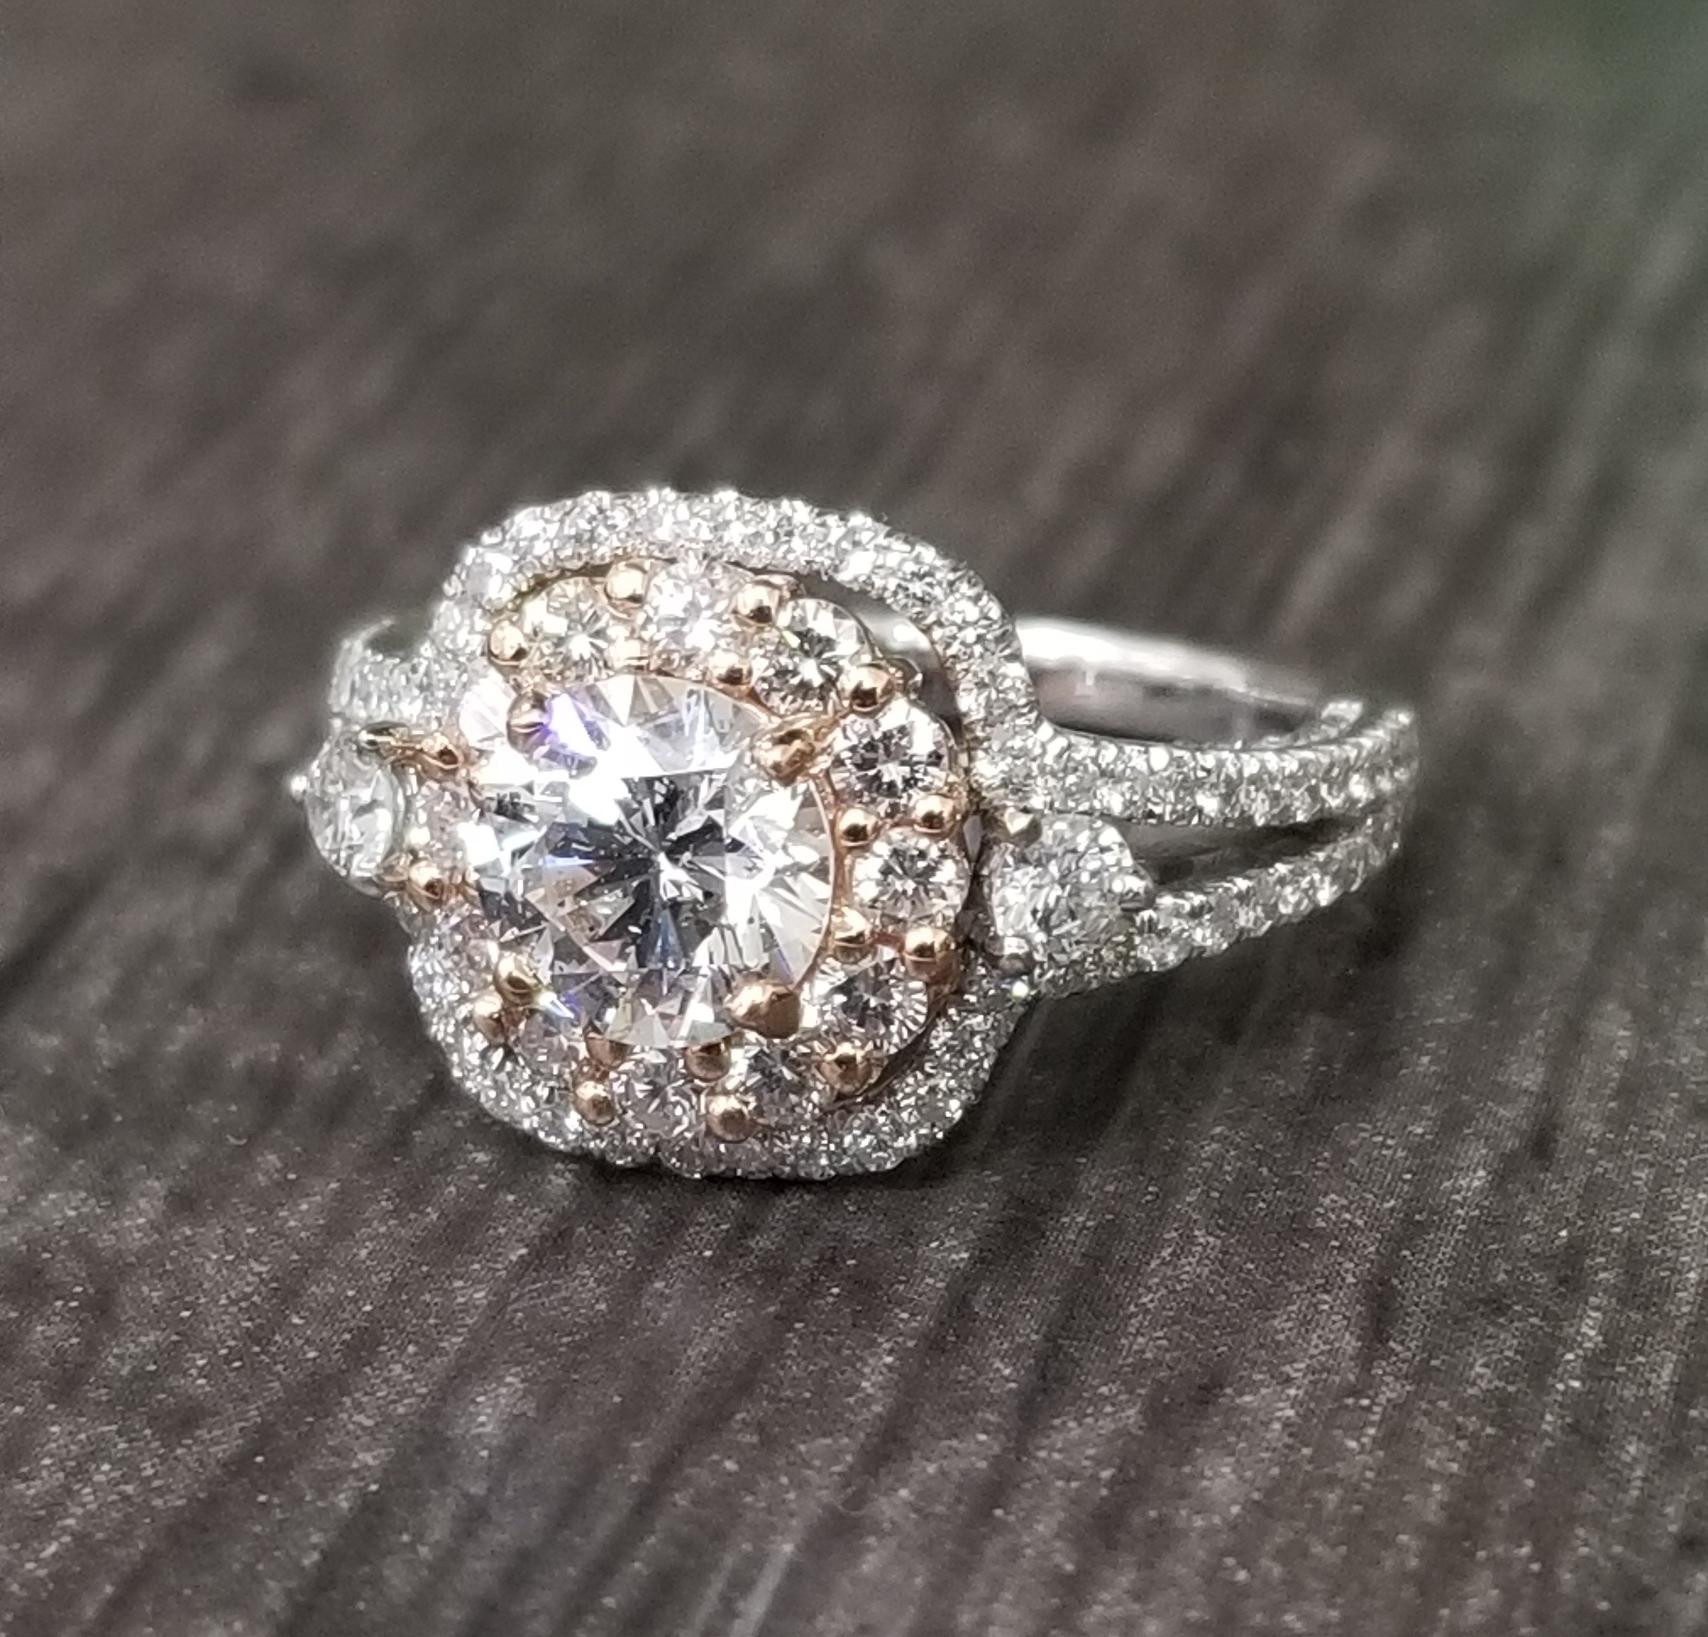 14k white and rose gold ladies diamond ring containing 1 brilliant cut diamond; color 